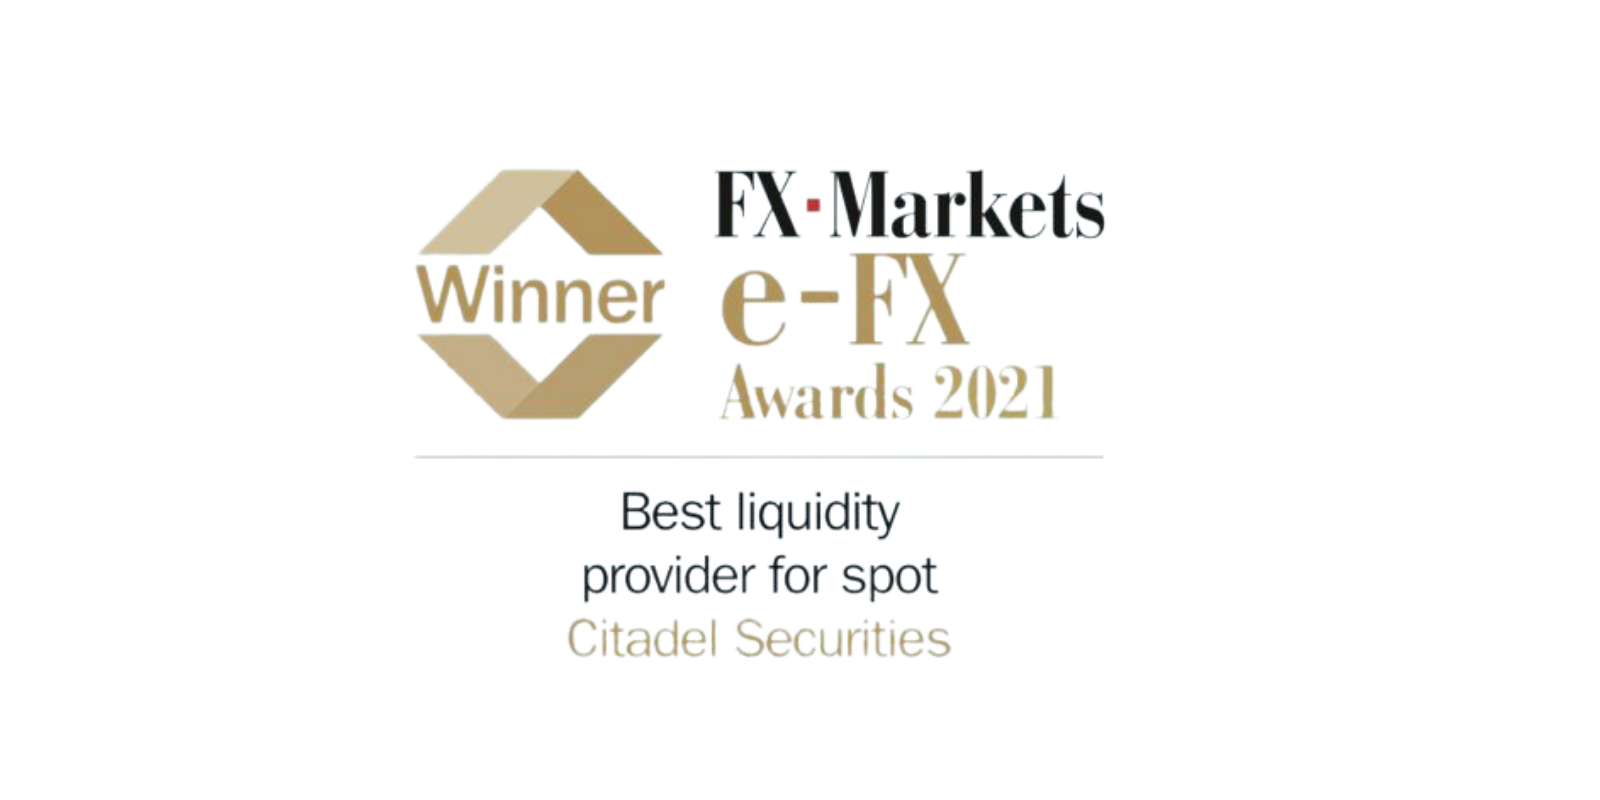 Citadel wins Best Liquidity Provider for Spot FX in FX Markets eFX Awards 2021